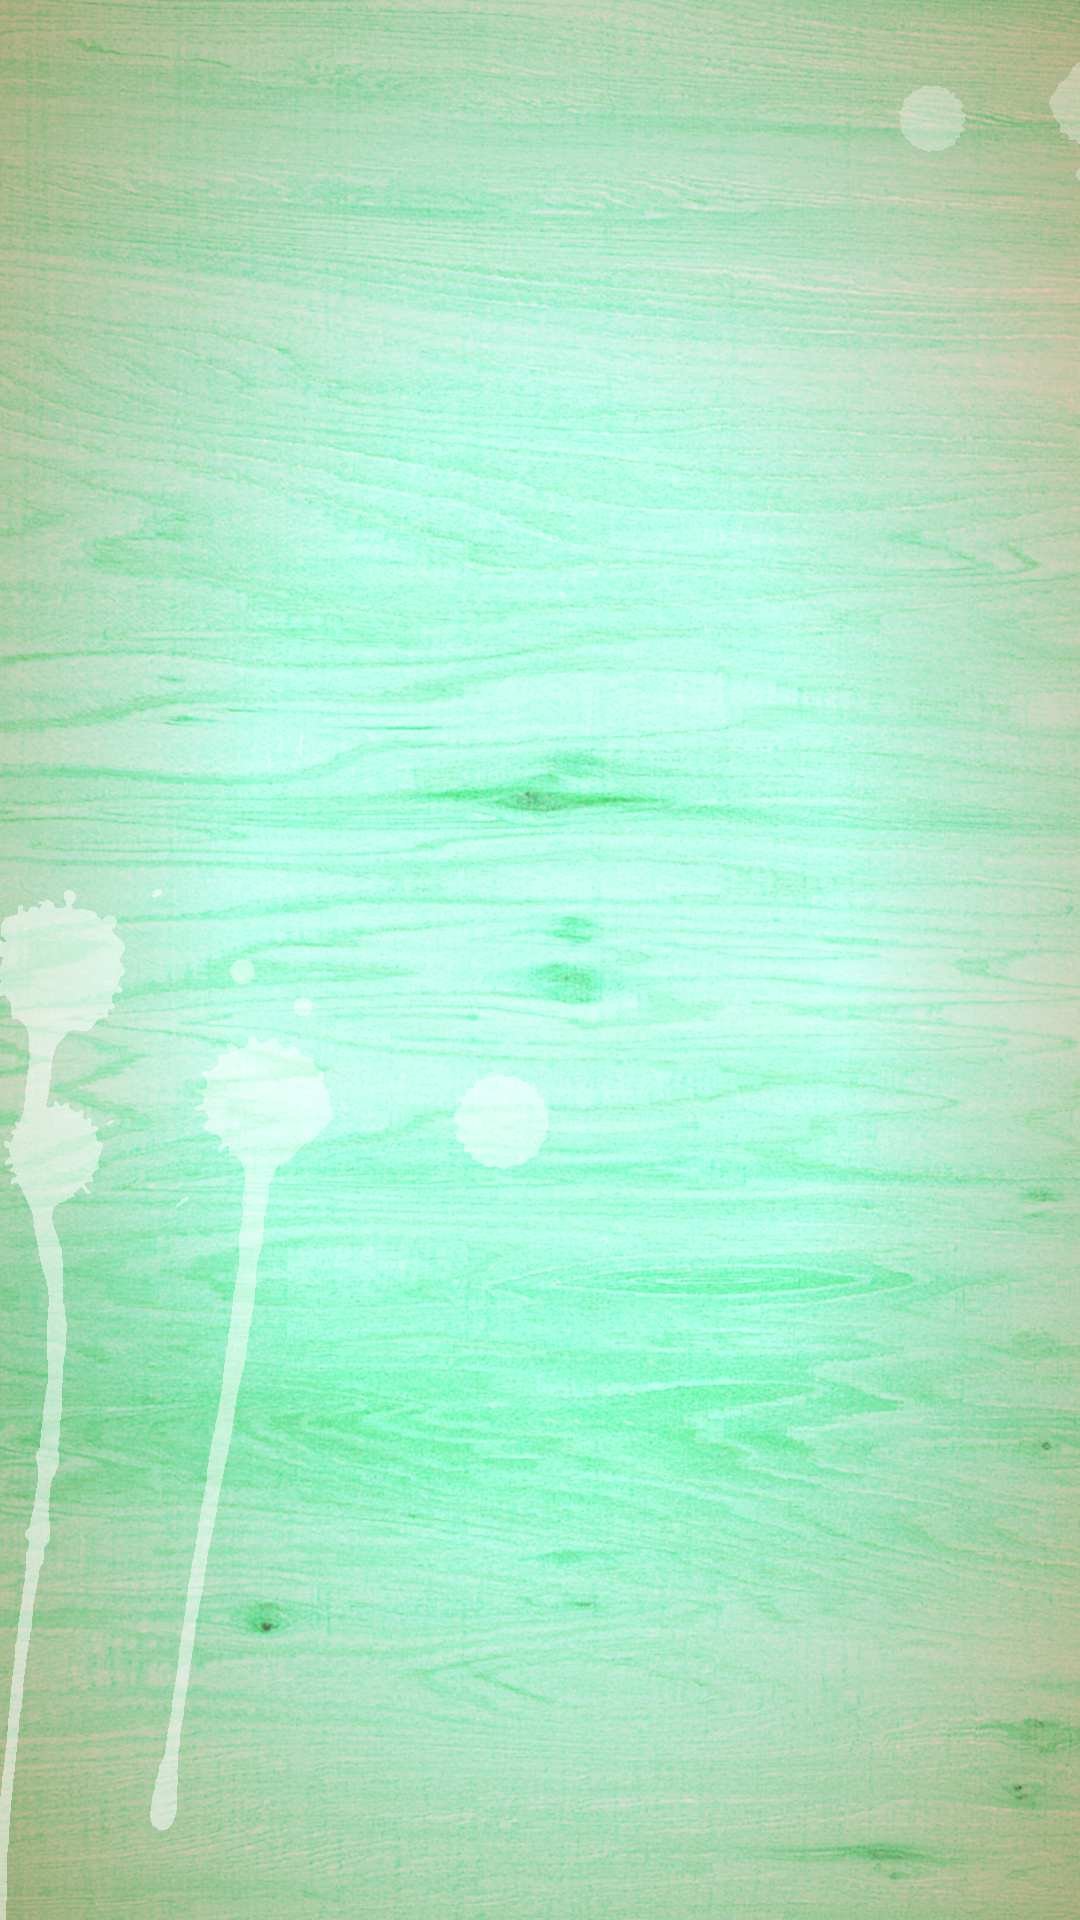 Grano de madera gradación del verde azul gota de agua   iPhone6sPlus